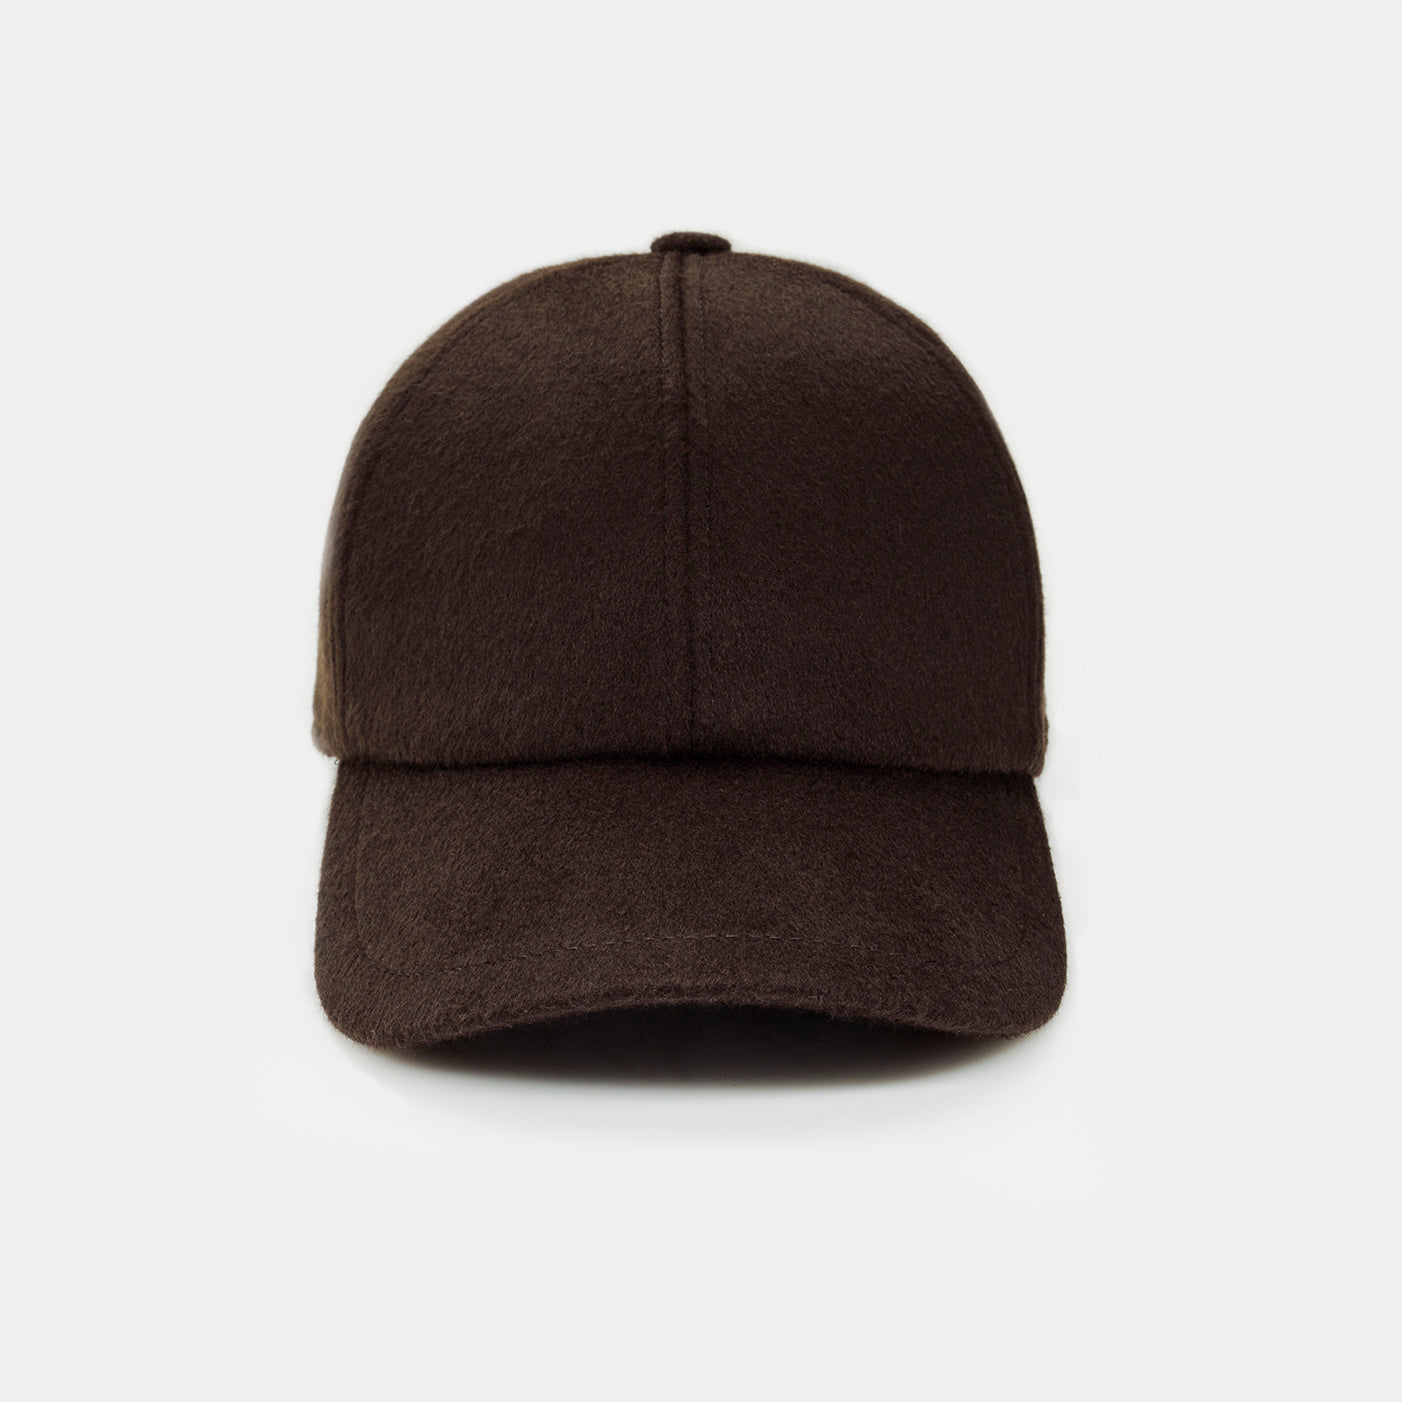 N33 BASEBALL CAP 100% cashmere cap made in Italy luxury baseball cap dark brown, unisex, high quality handmade cap artisan-made hat 